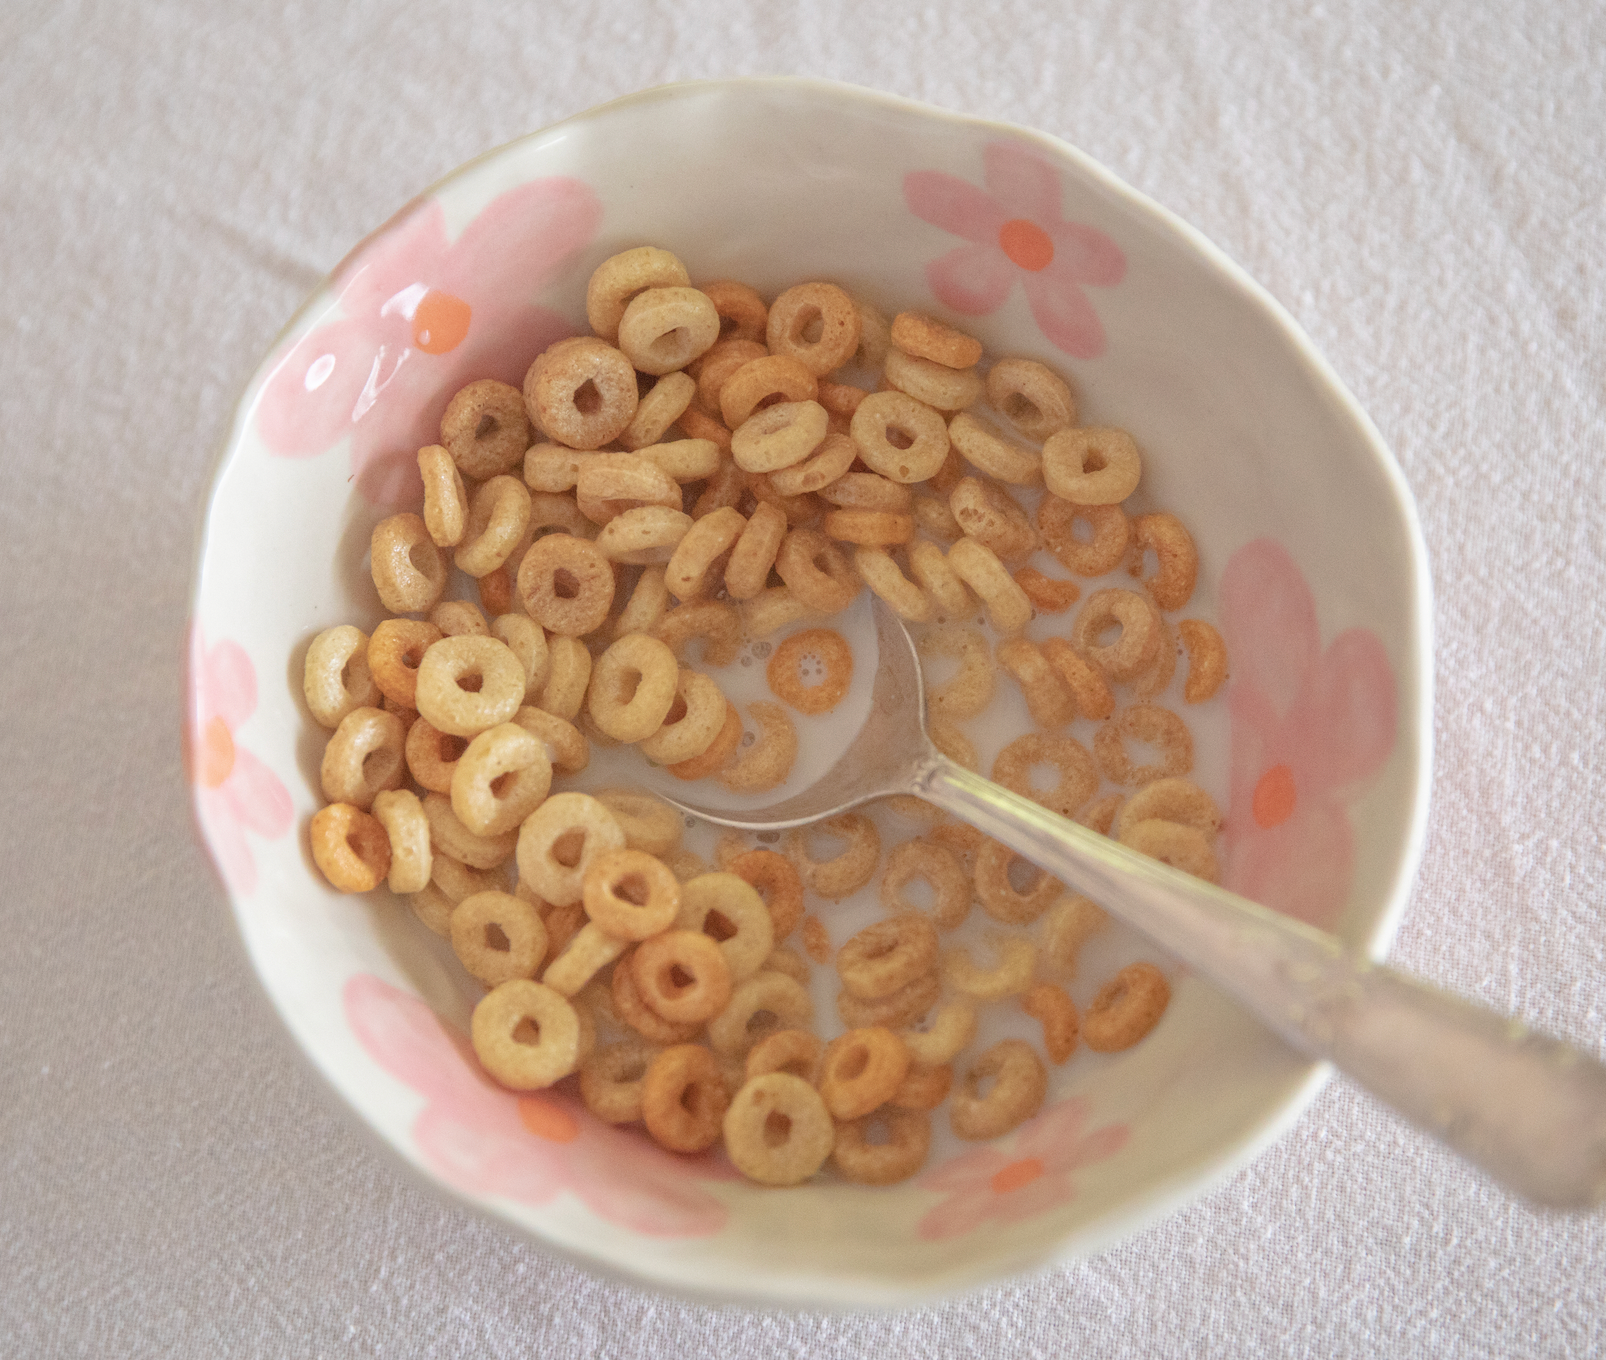 pink daisy breakfast bowl